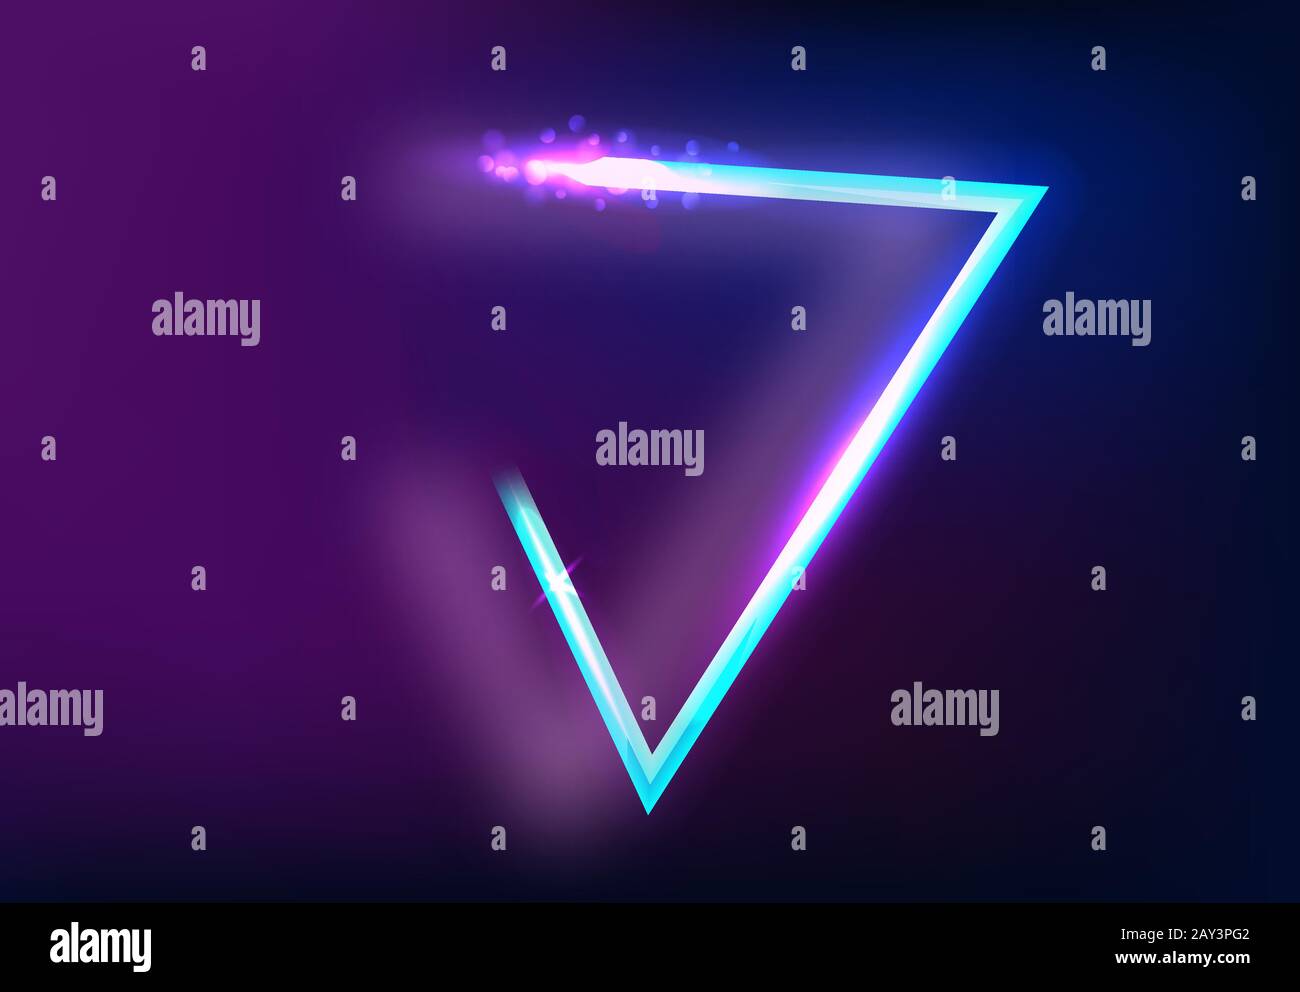 Triangular shape Night club neon sign. Blank 3d retro light signboard with shining neon effect. Stock Vector